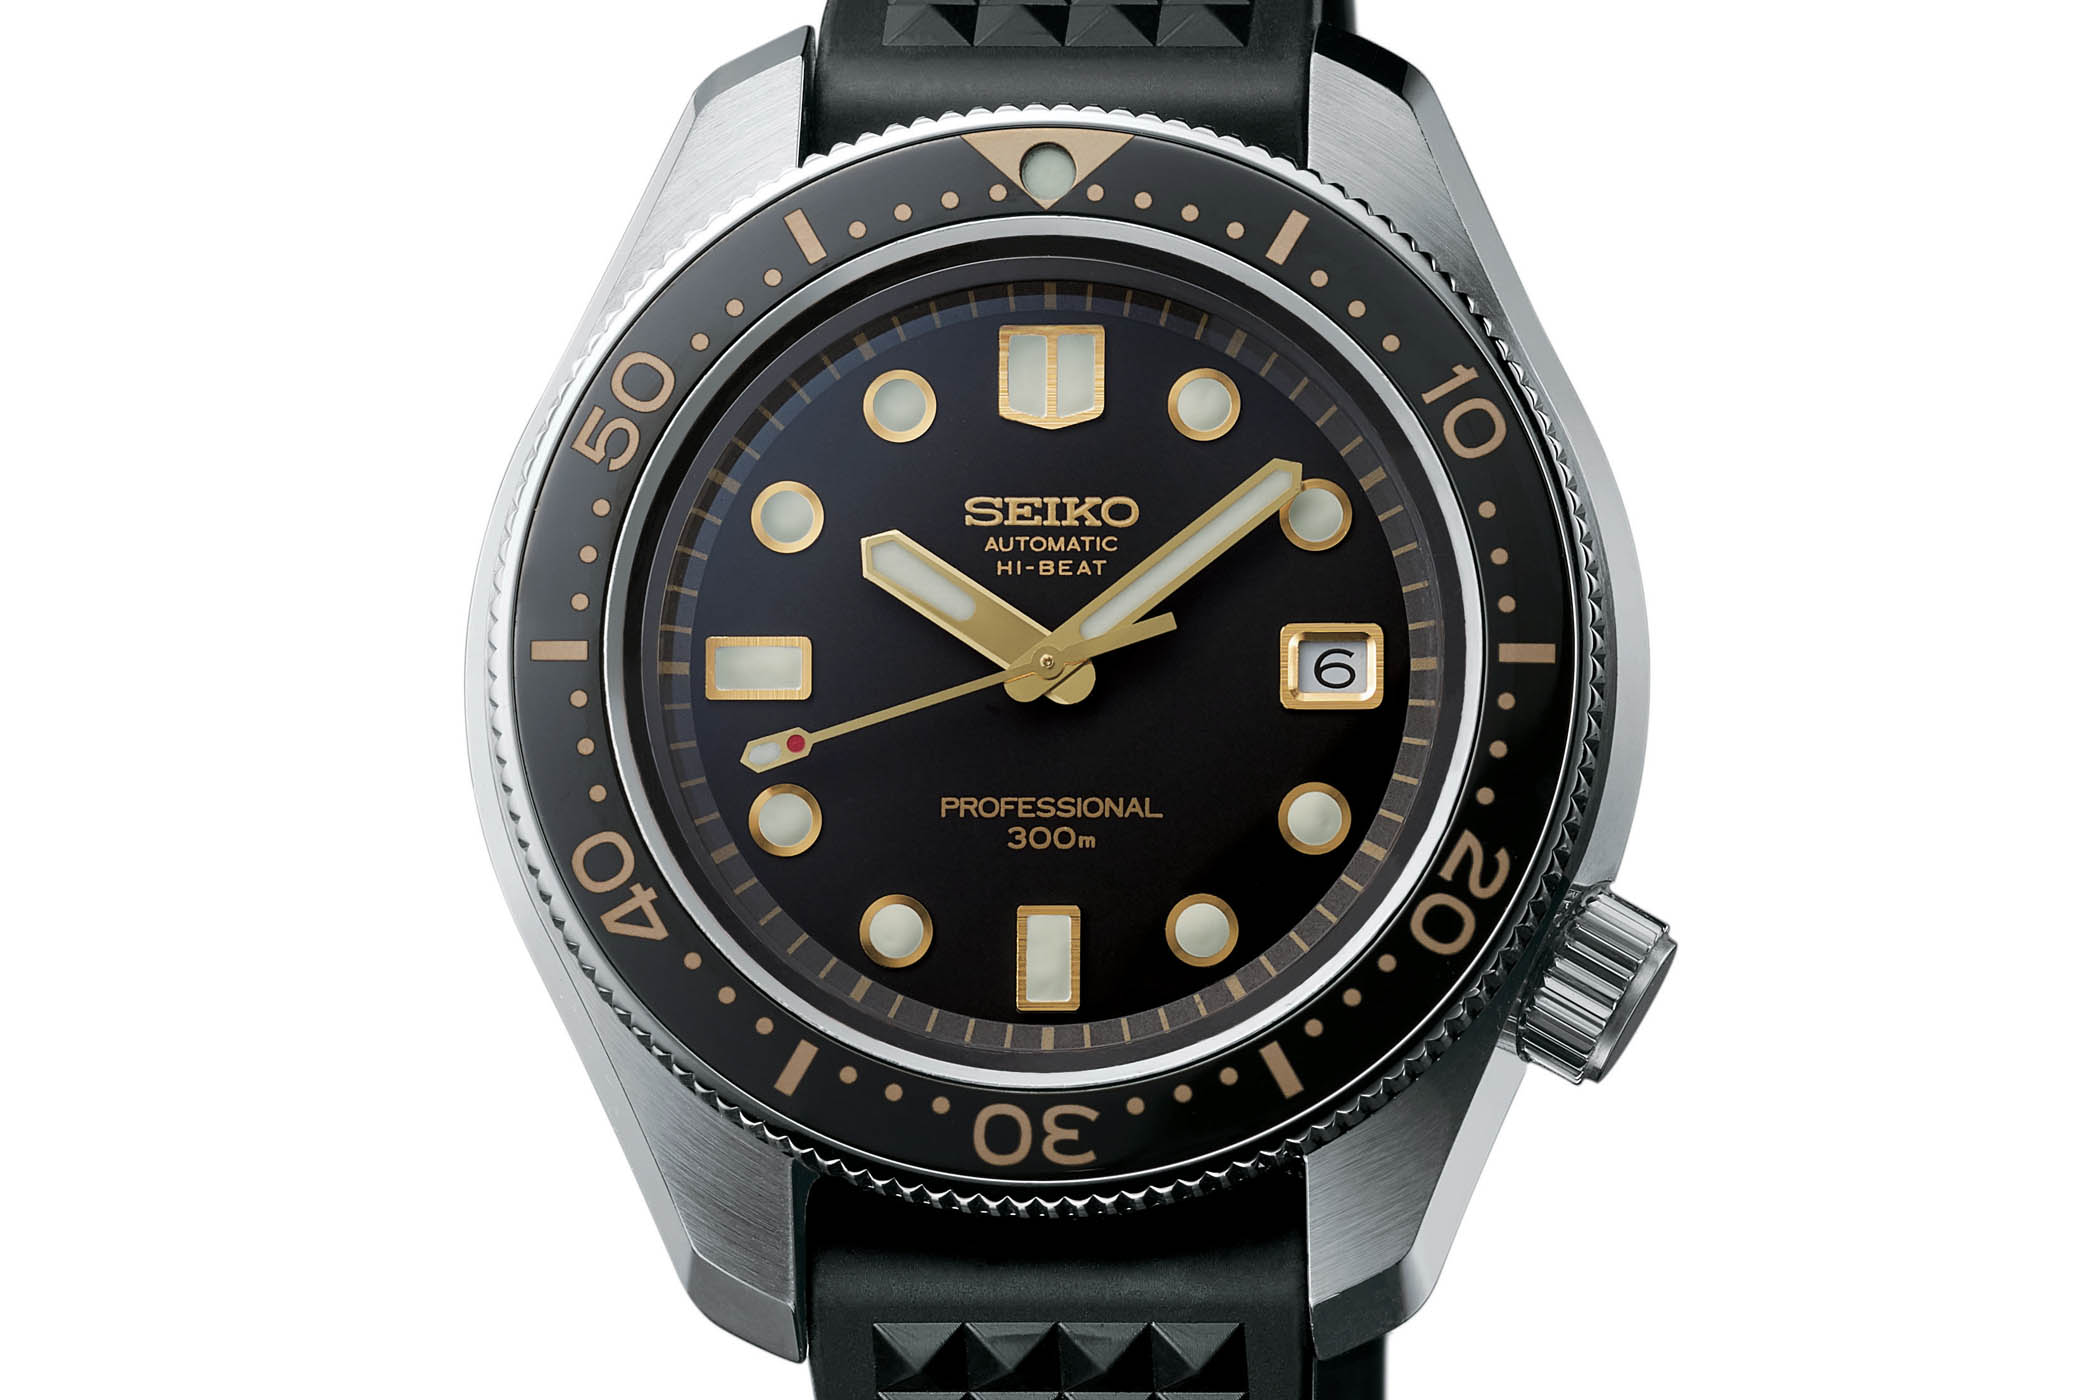 Baselworld 2018: Seiko Prospex Diver 300m Hi-Beat SLA025 Watch